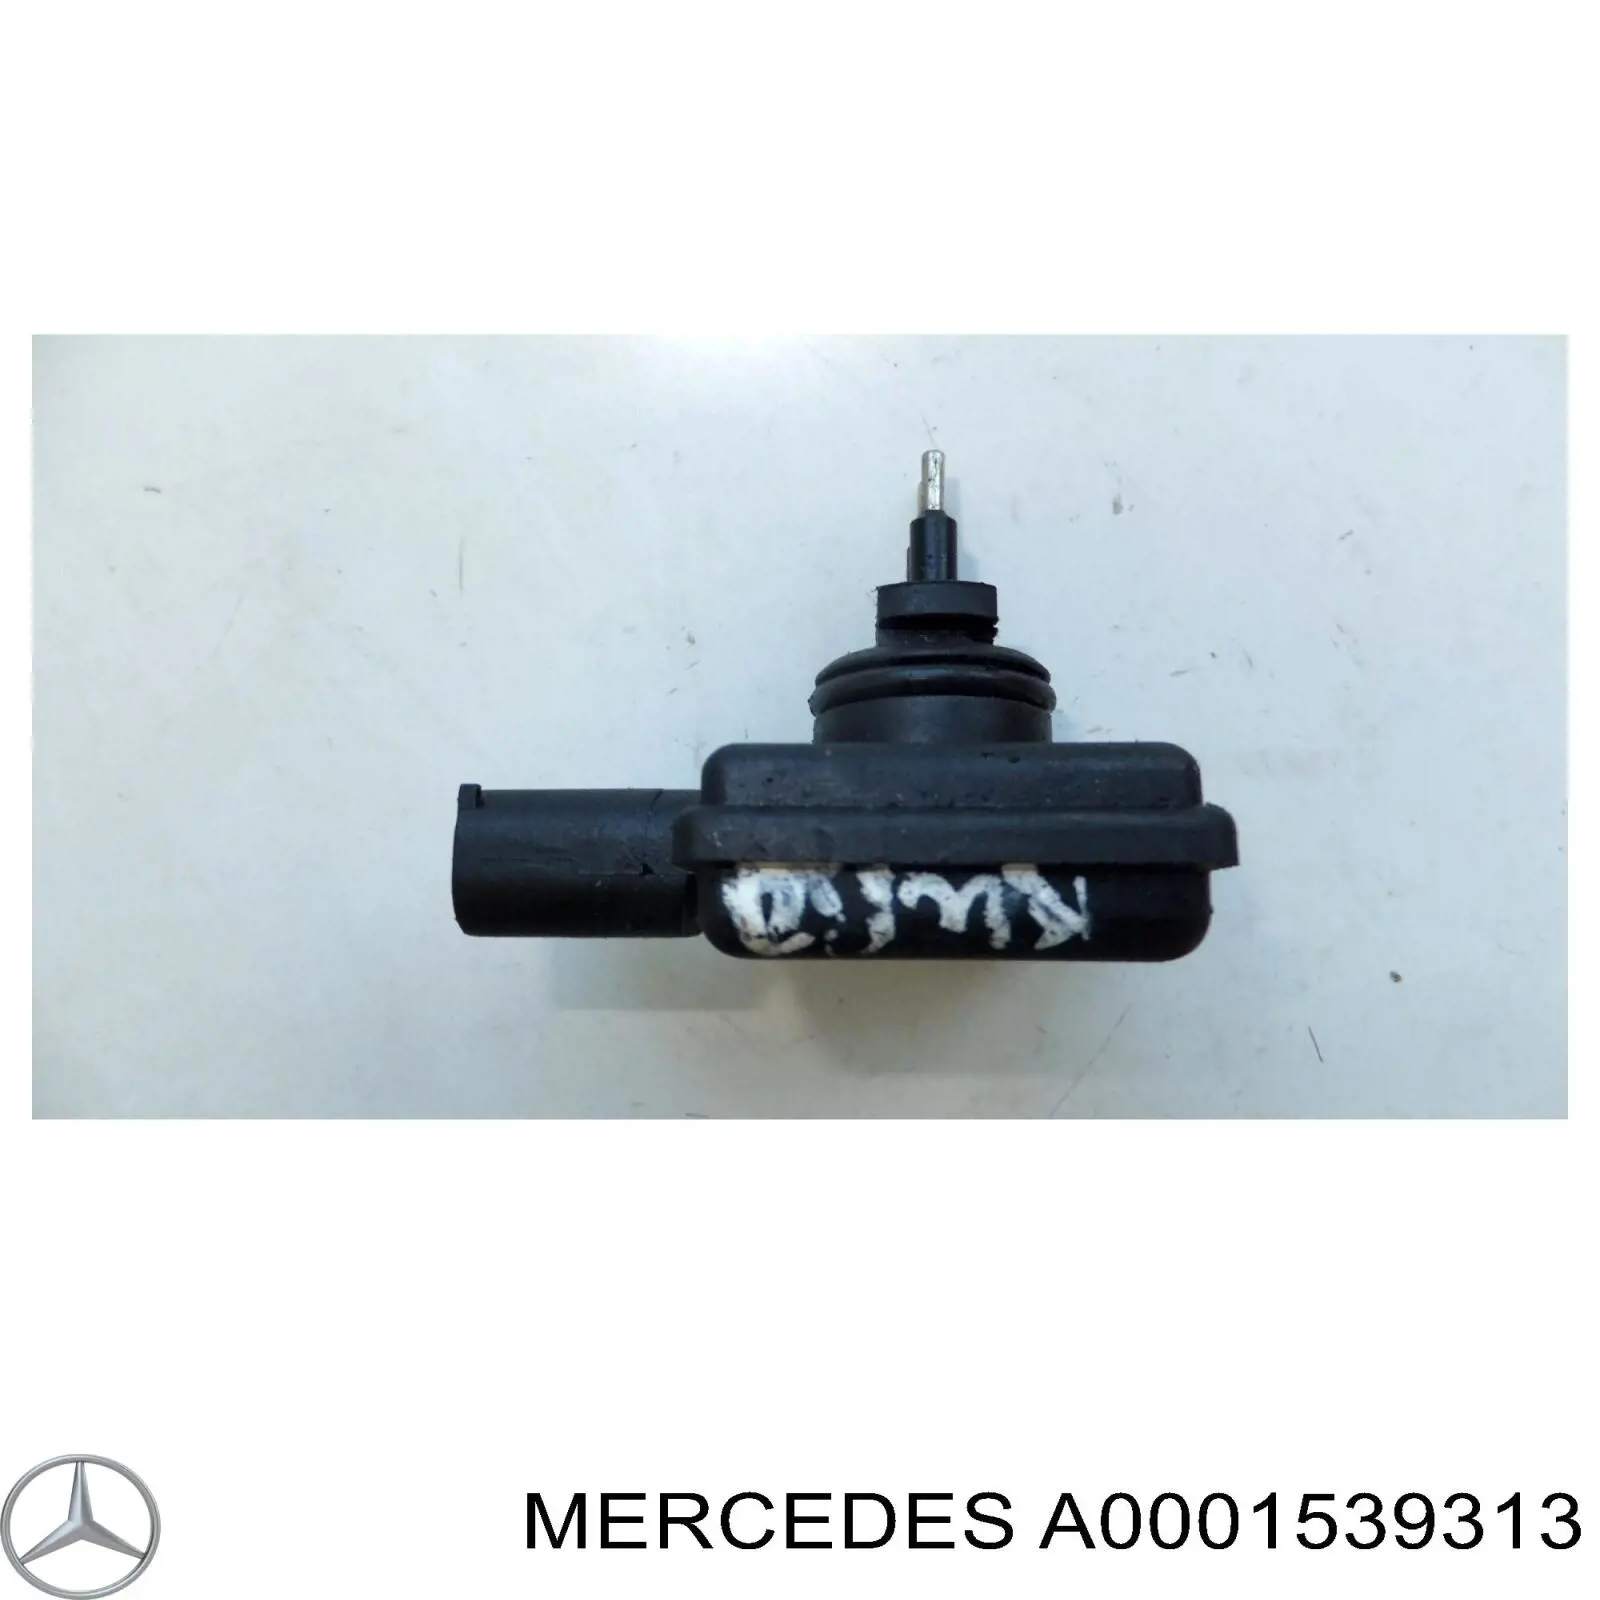 A0001539313 Mercedes sensor do nível da água de filtro de combustível